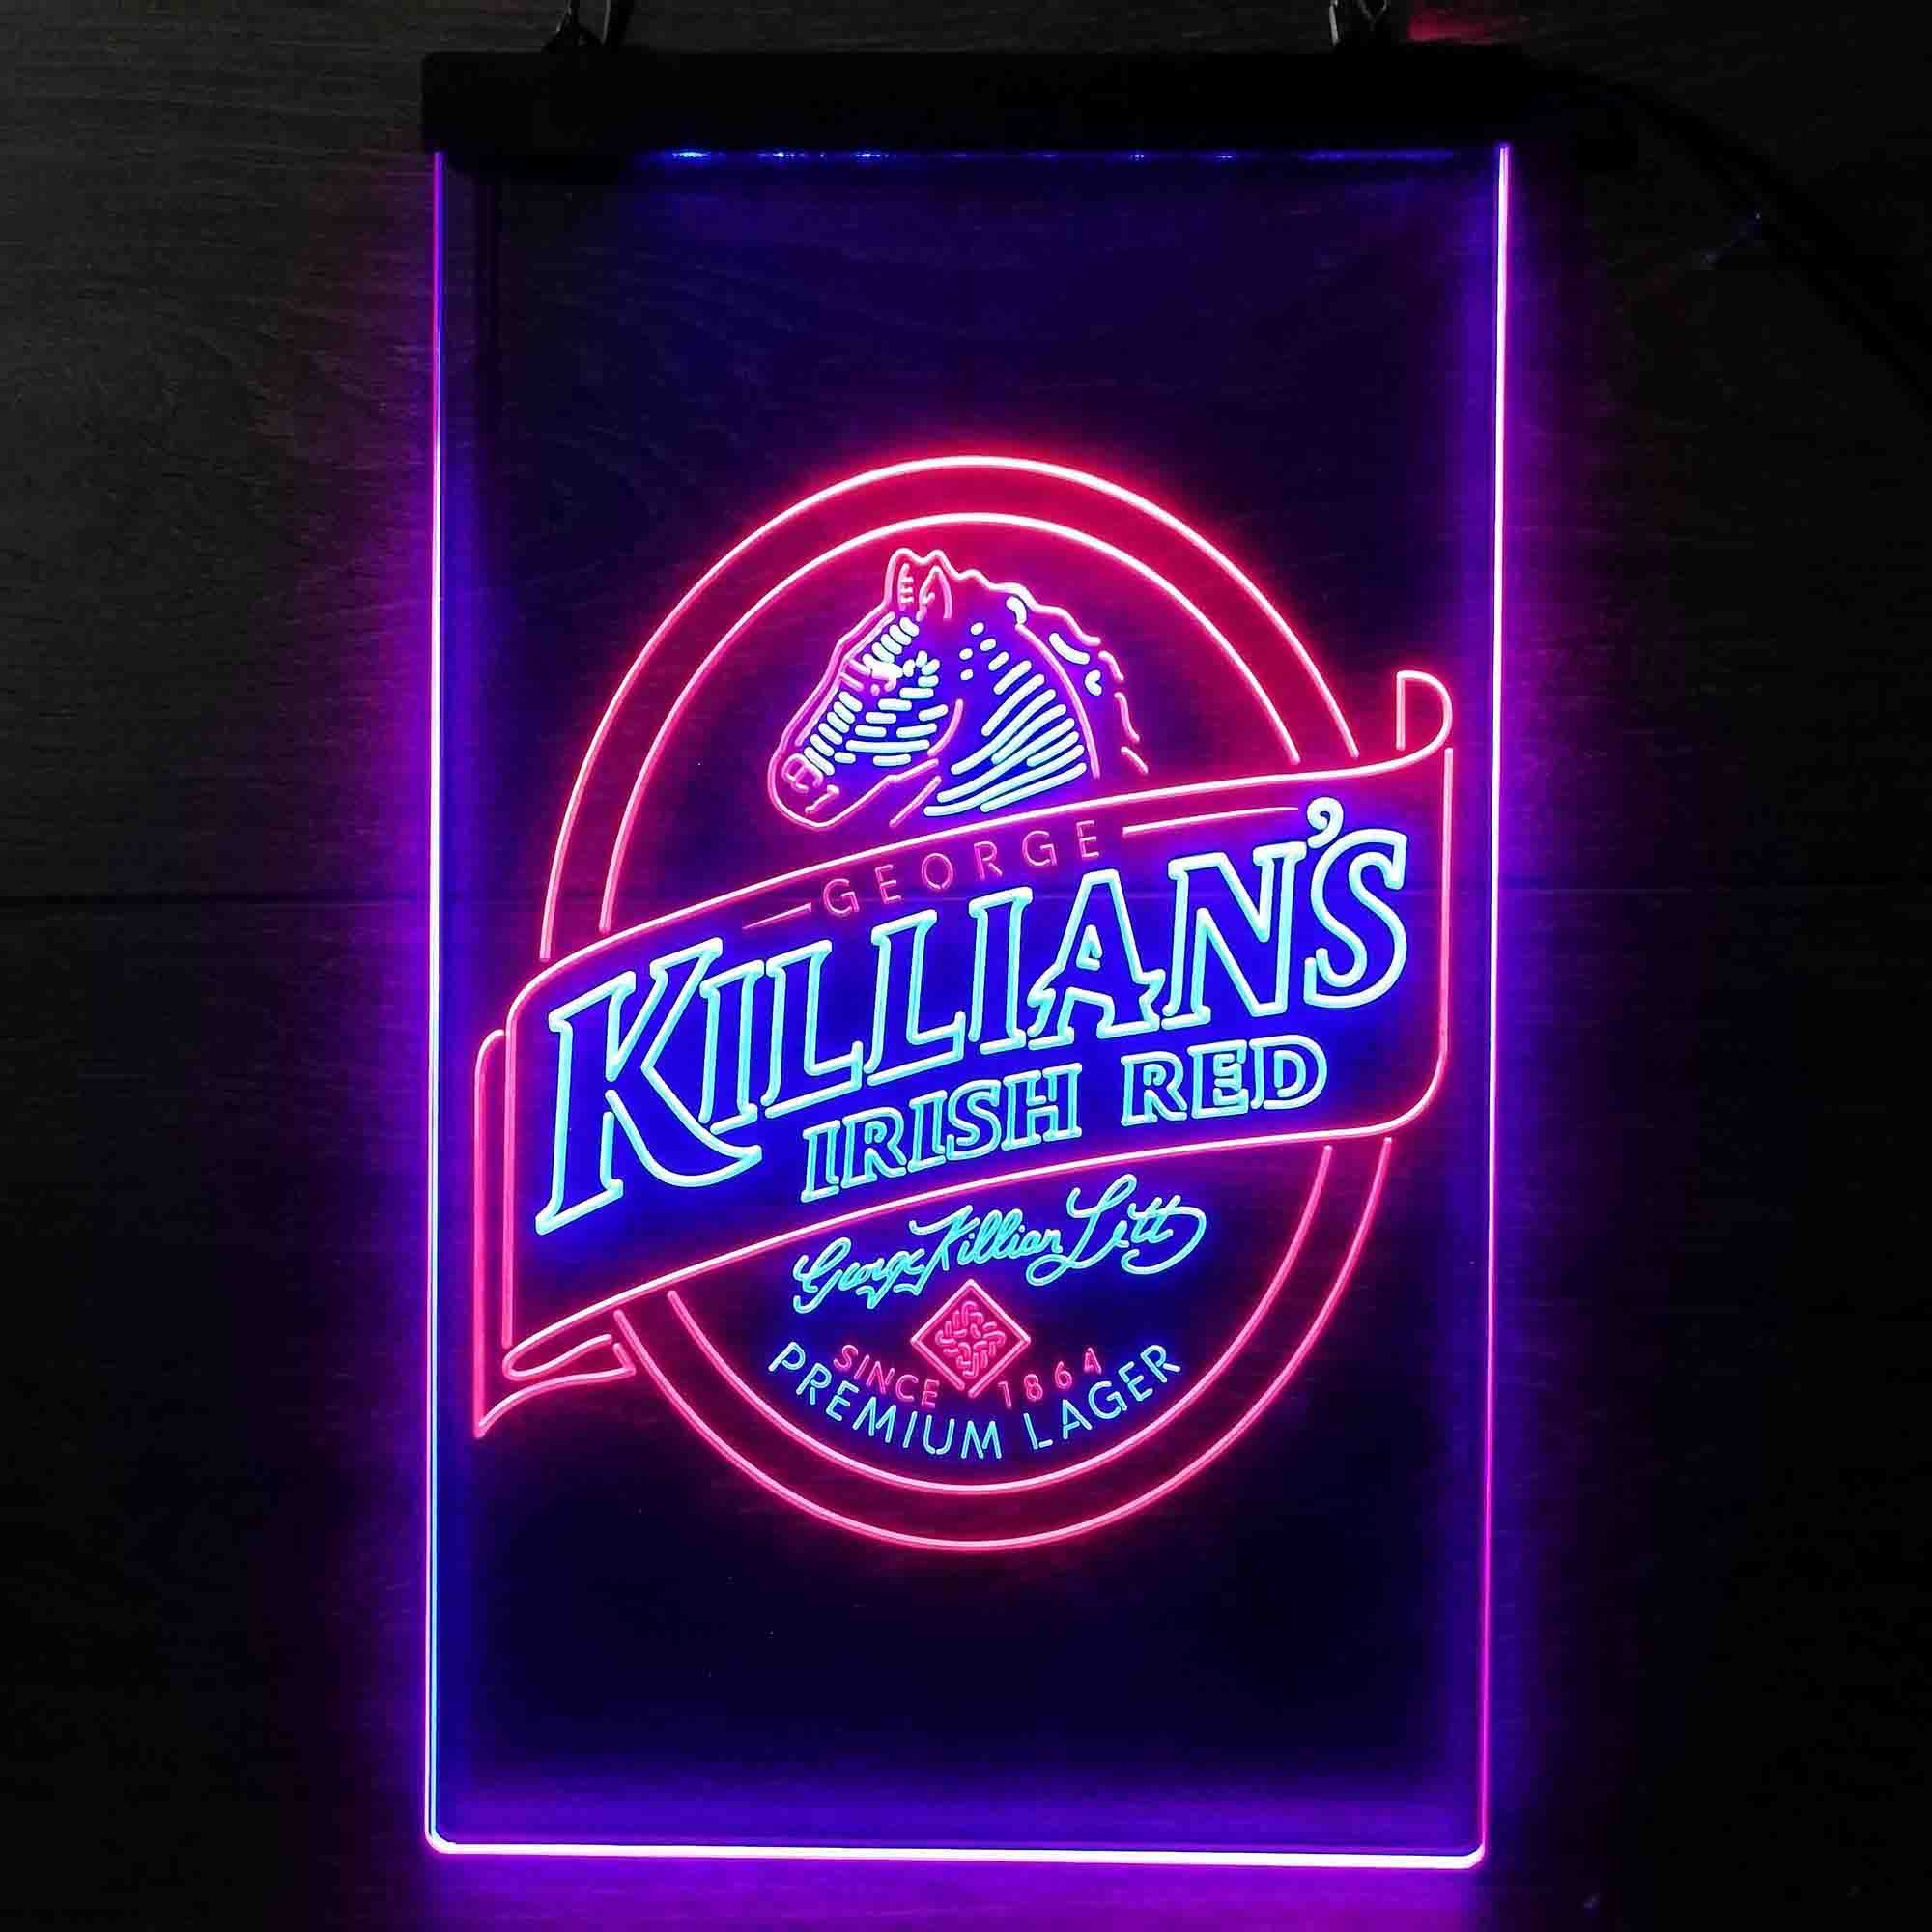 George Killian's Irish Red Premium Lager Neon LED Sign